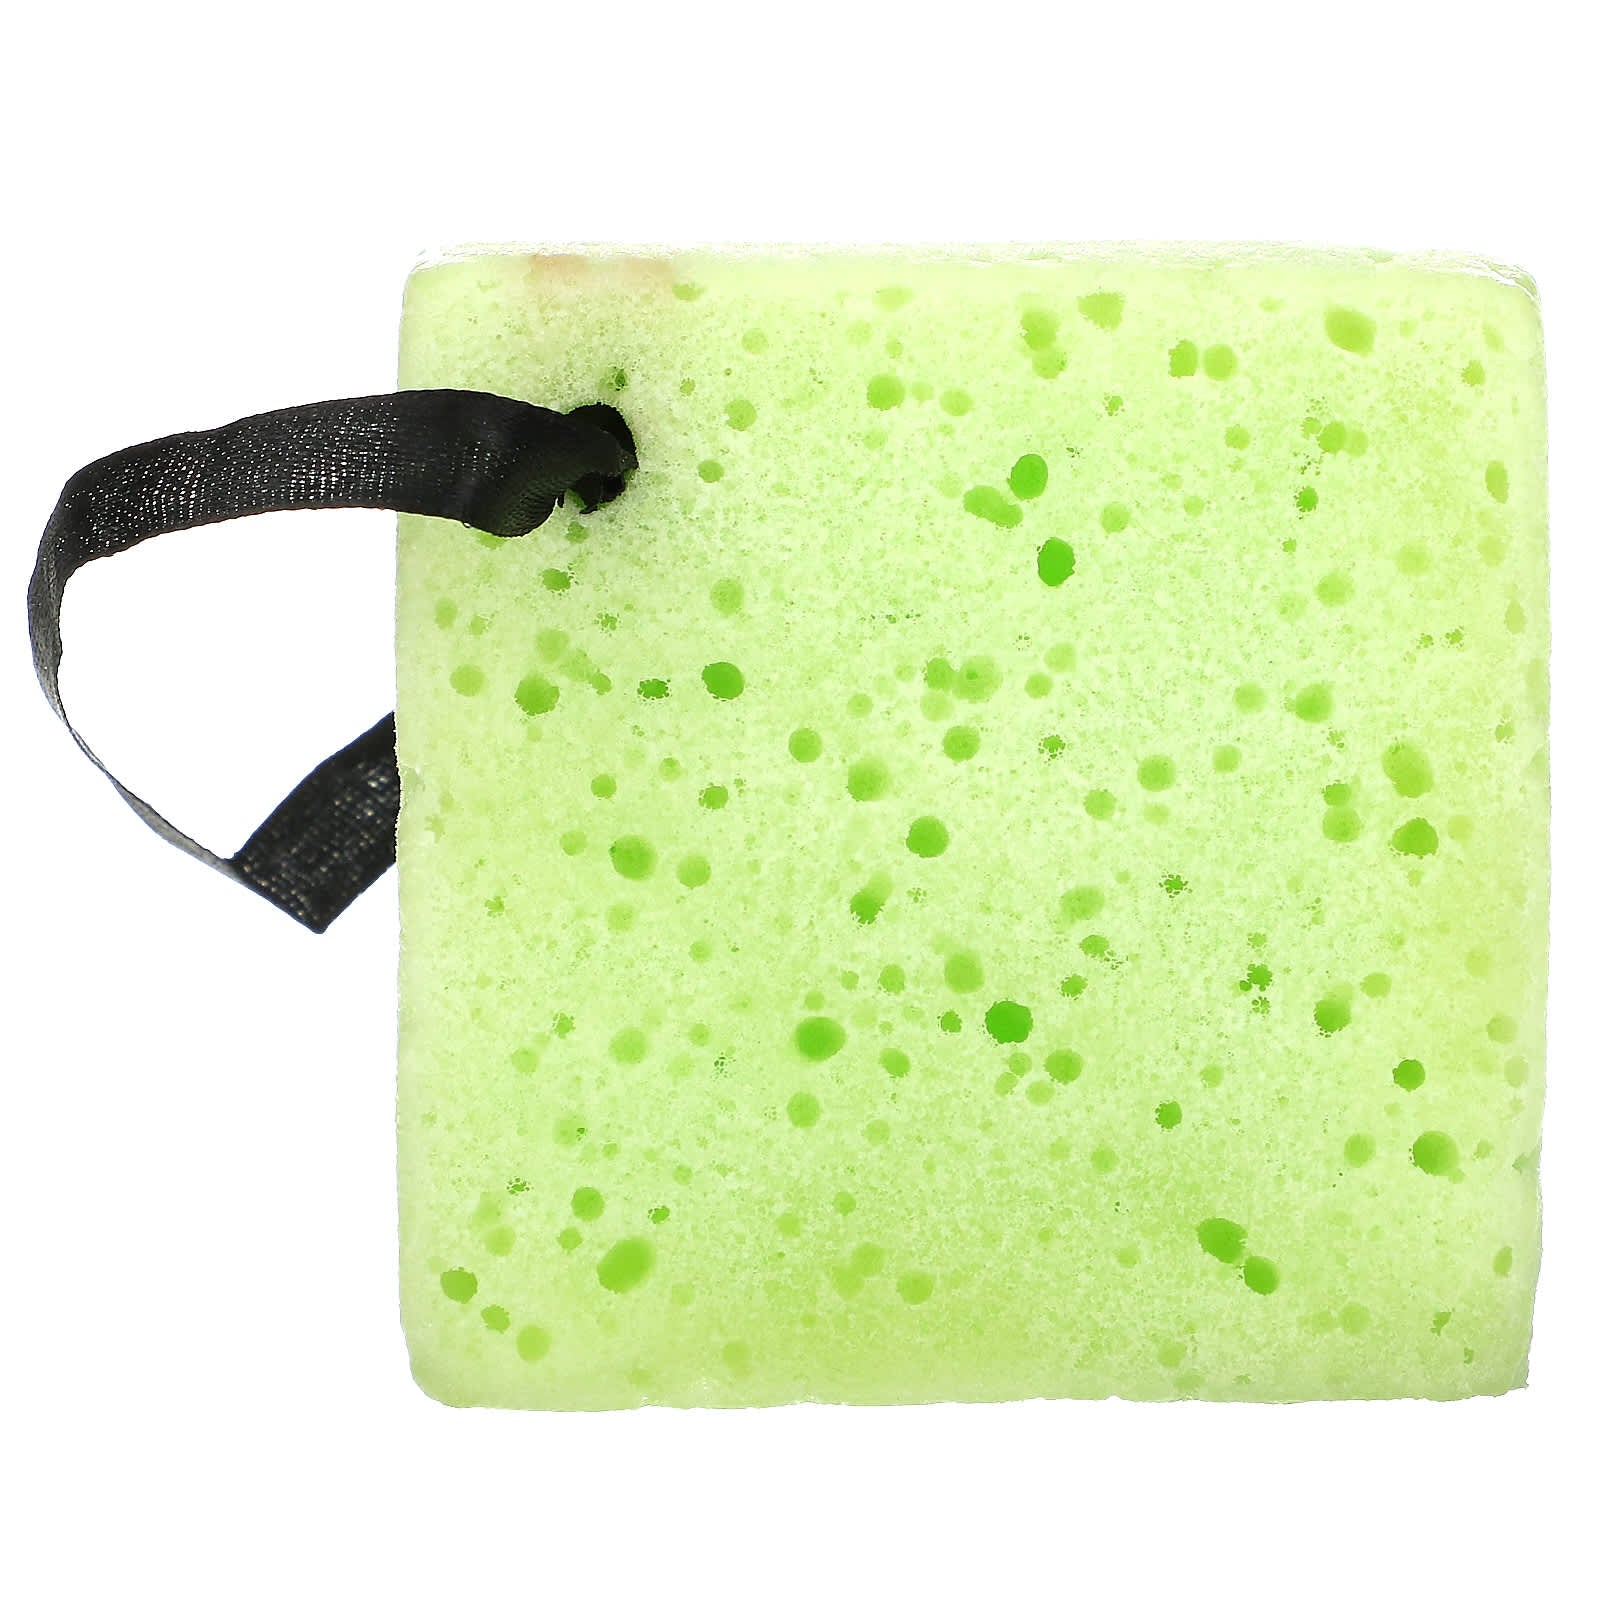 Freeman Beauty, Deep Cleansing Soap-Infused Sponge, Green Tea, 1 Sponge(75 g)